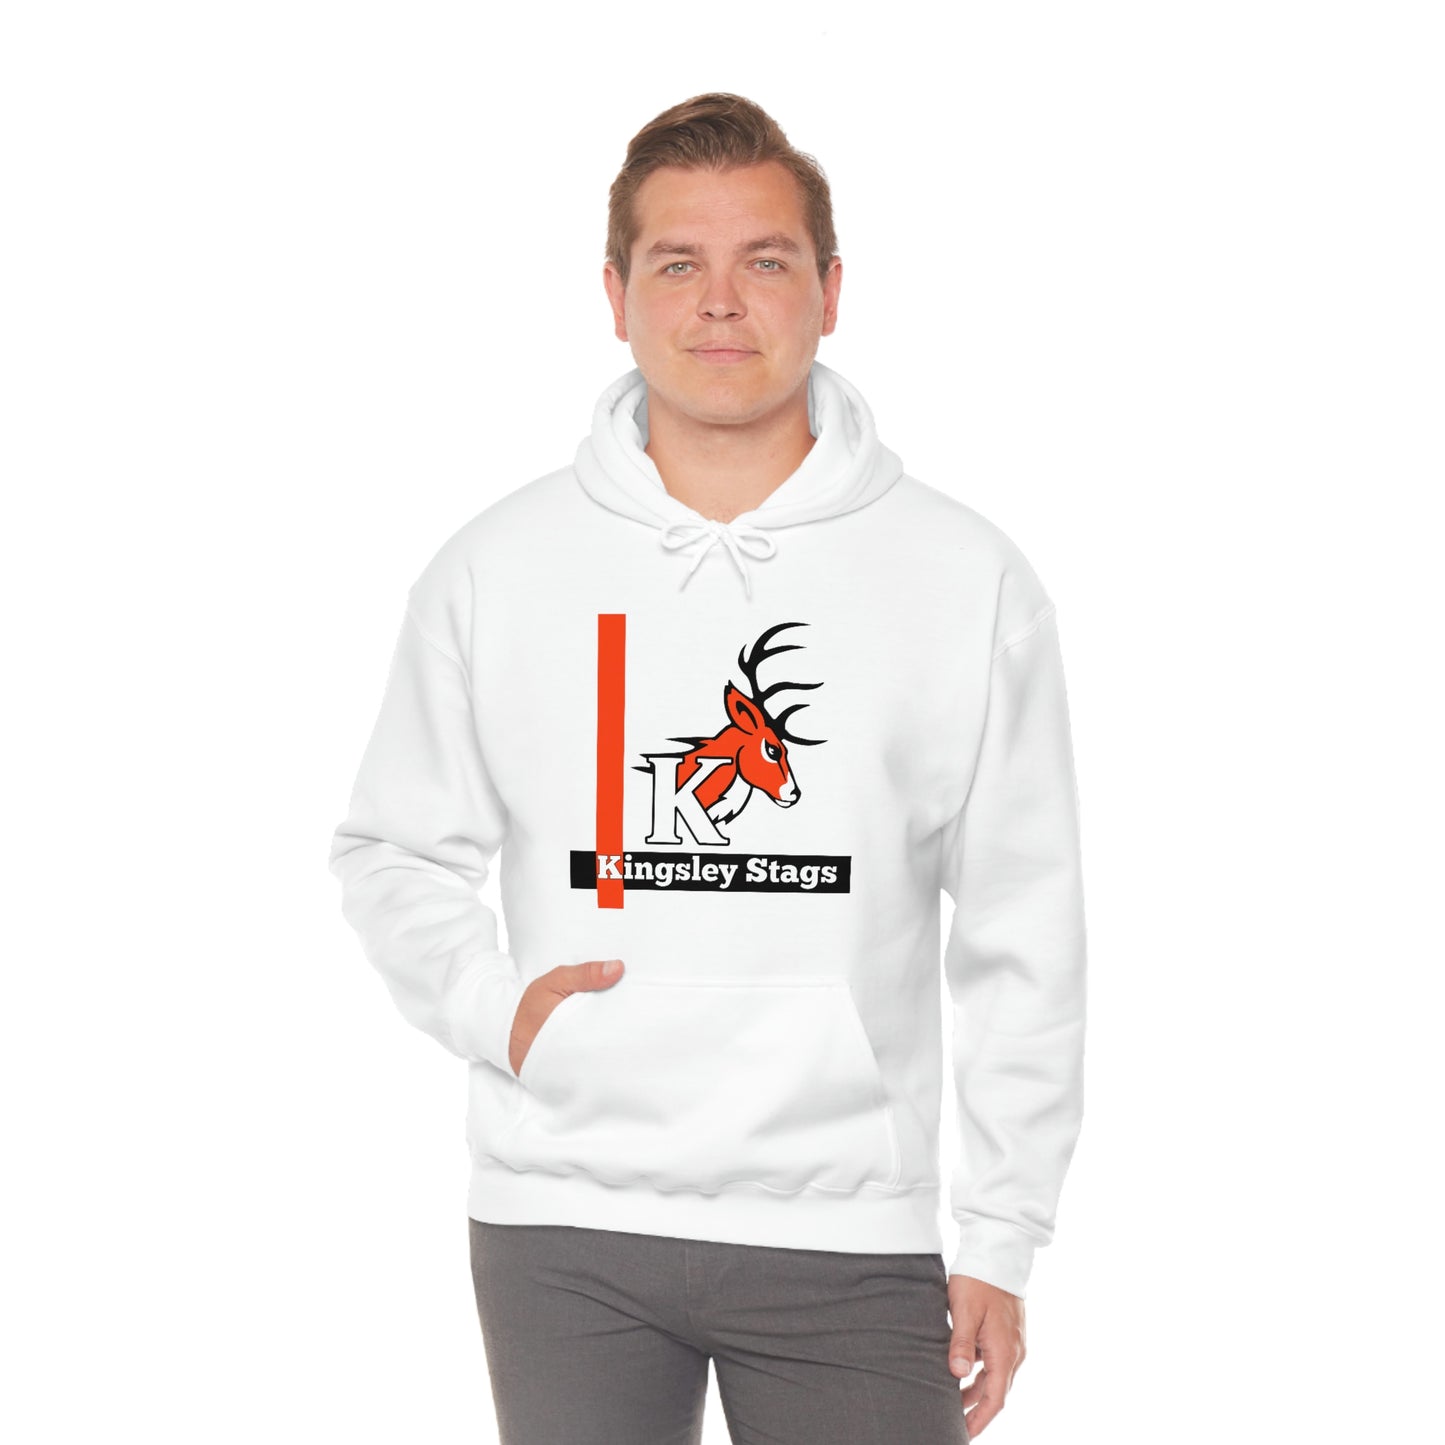 Logo 4 High School Unisex Heavy Blend™ Hooded Sweatshirt #H05-01G